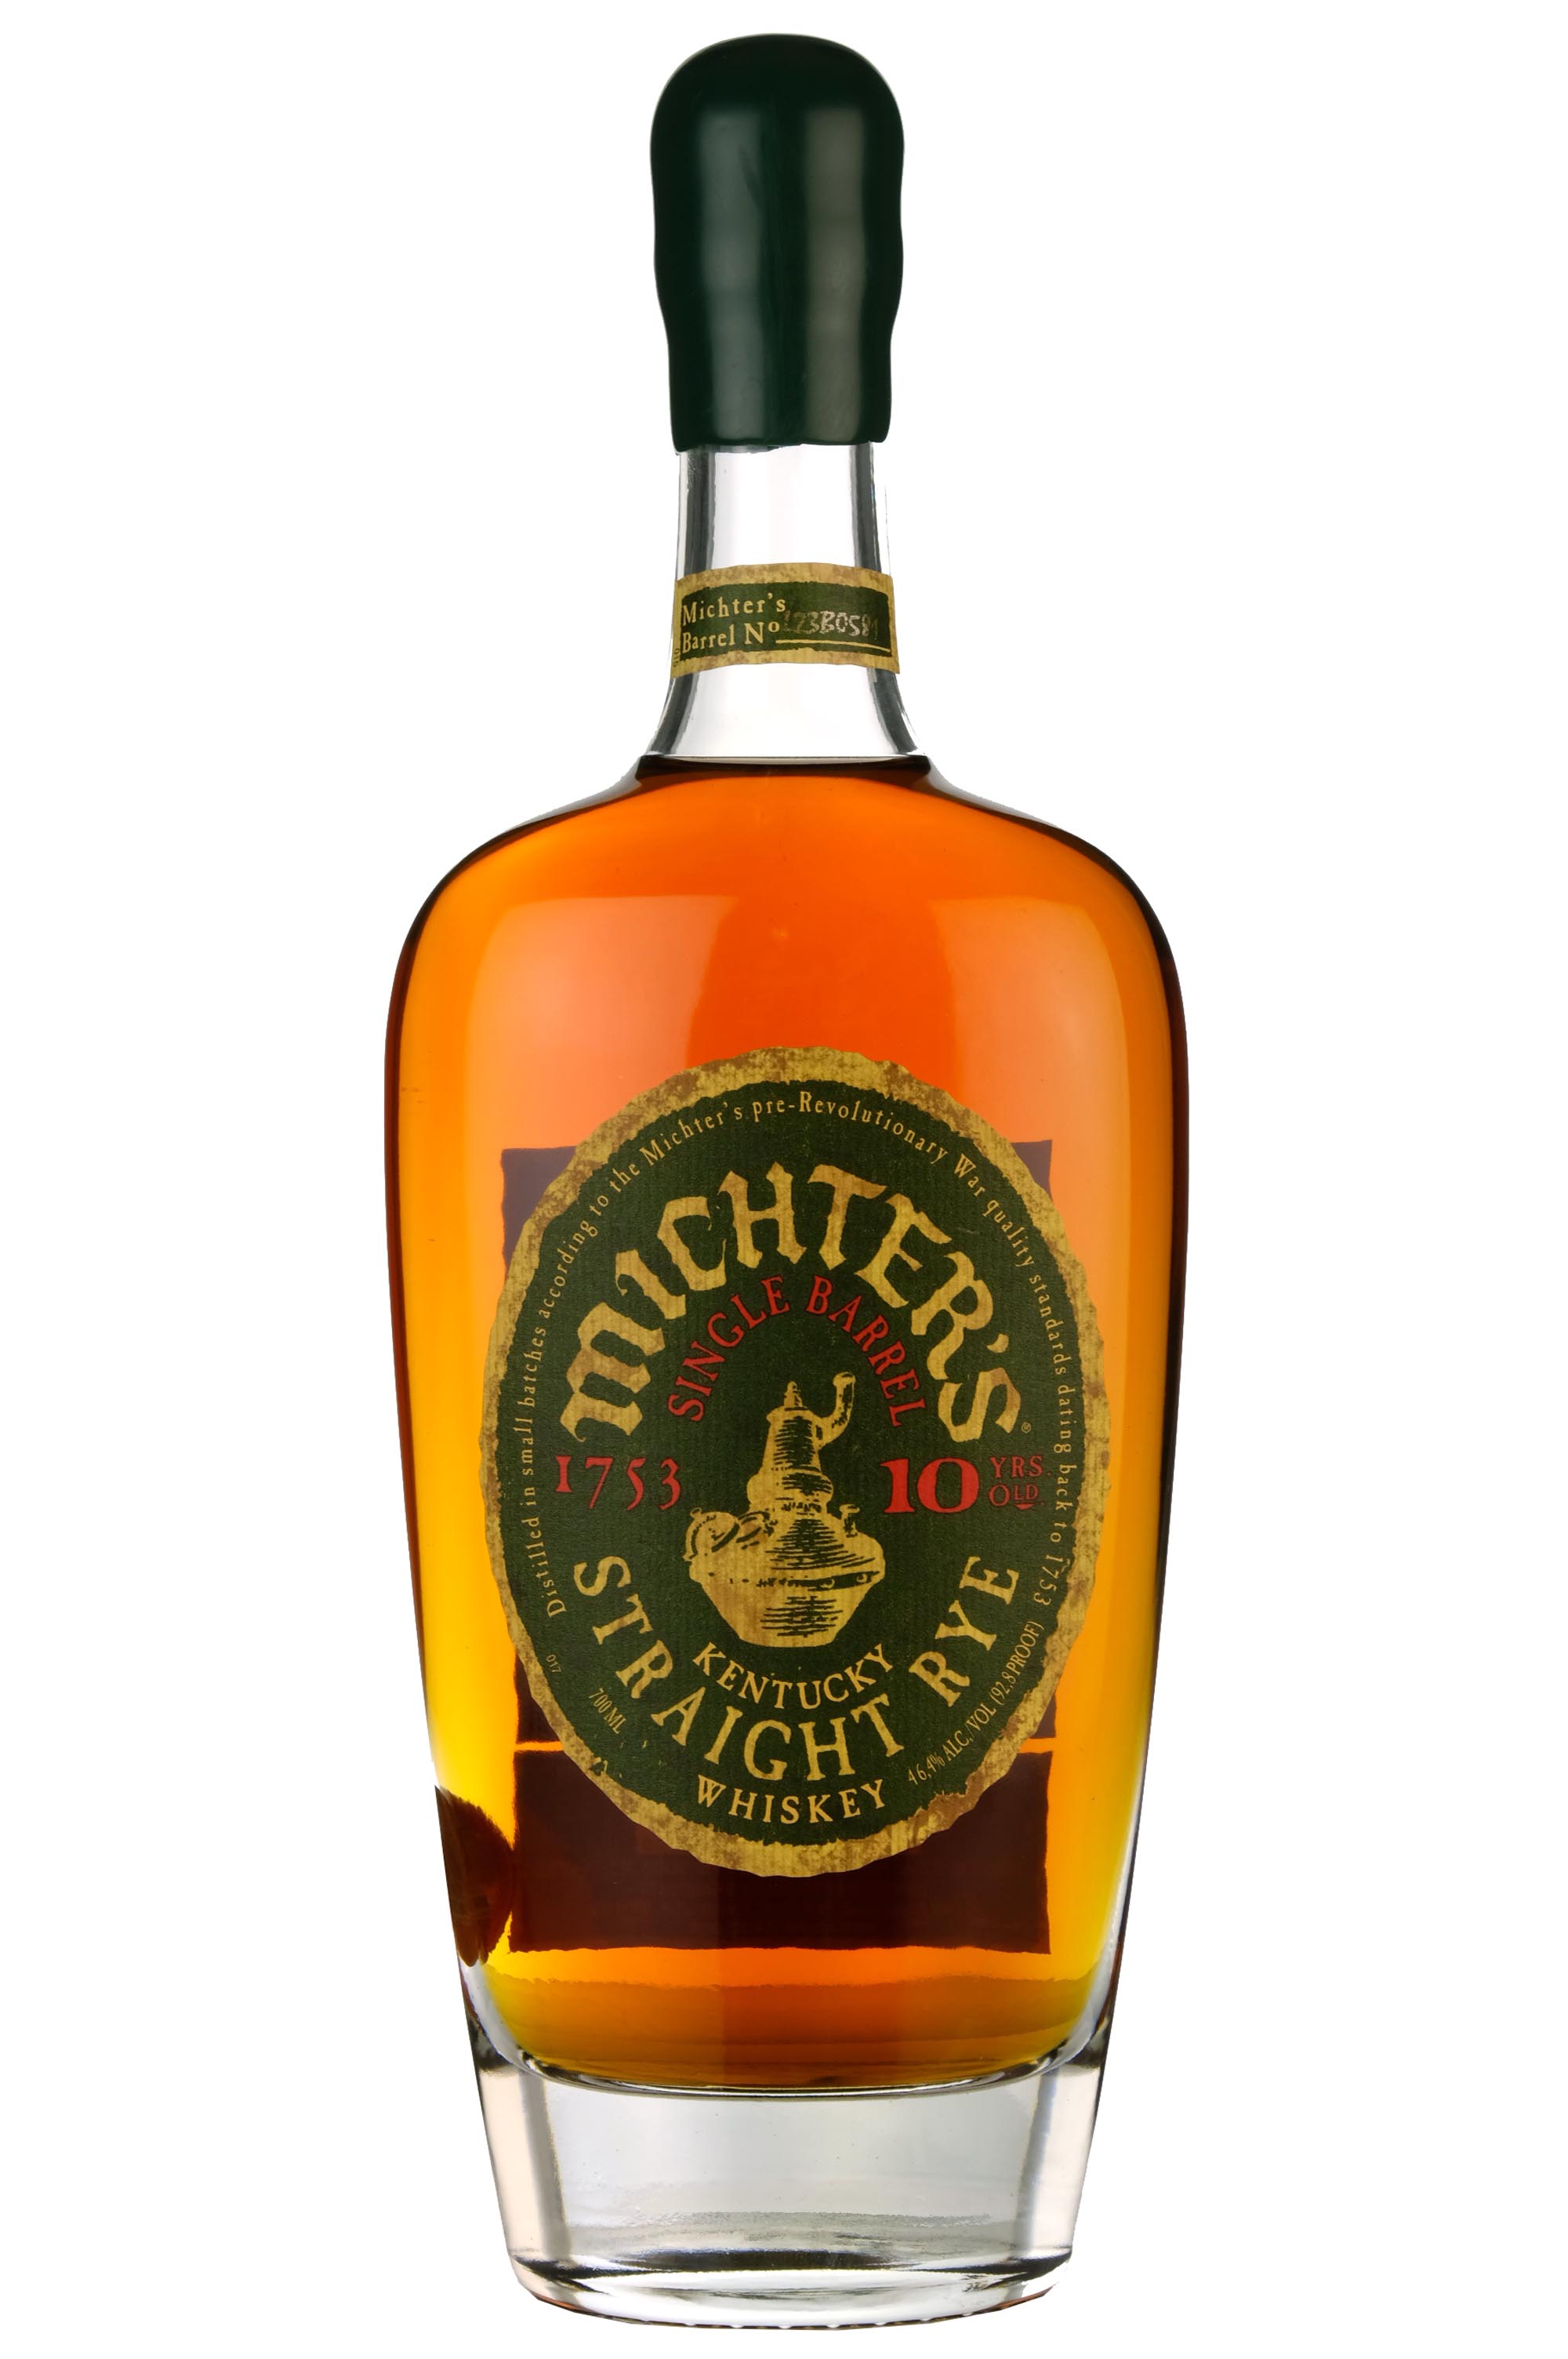 Michter's 10 Year Old Kentucky Straight Rye | Single Barrel #L23B0581